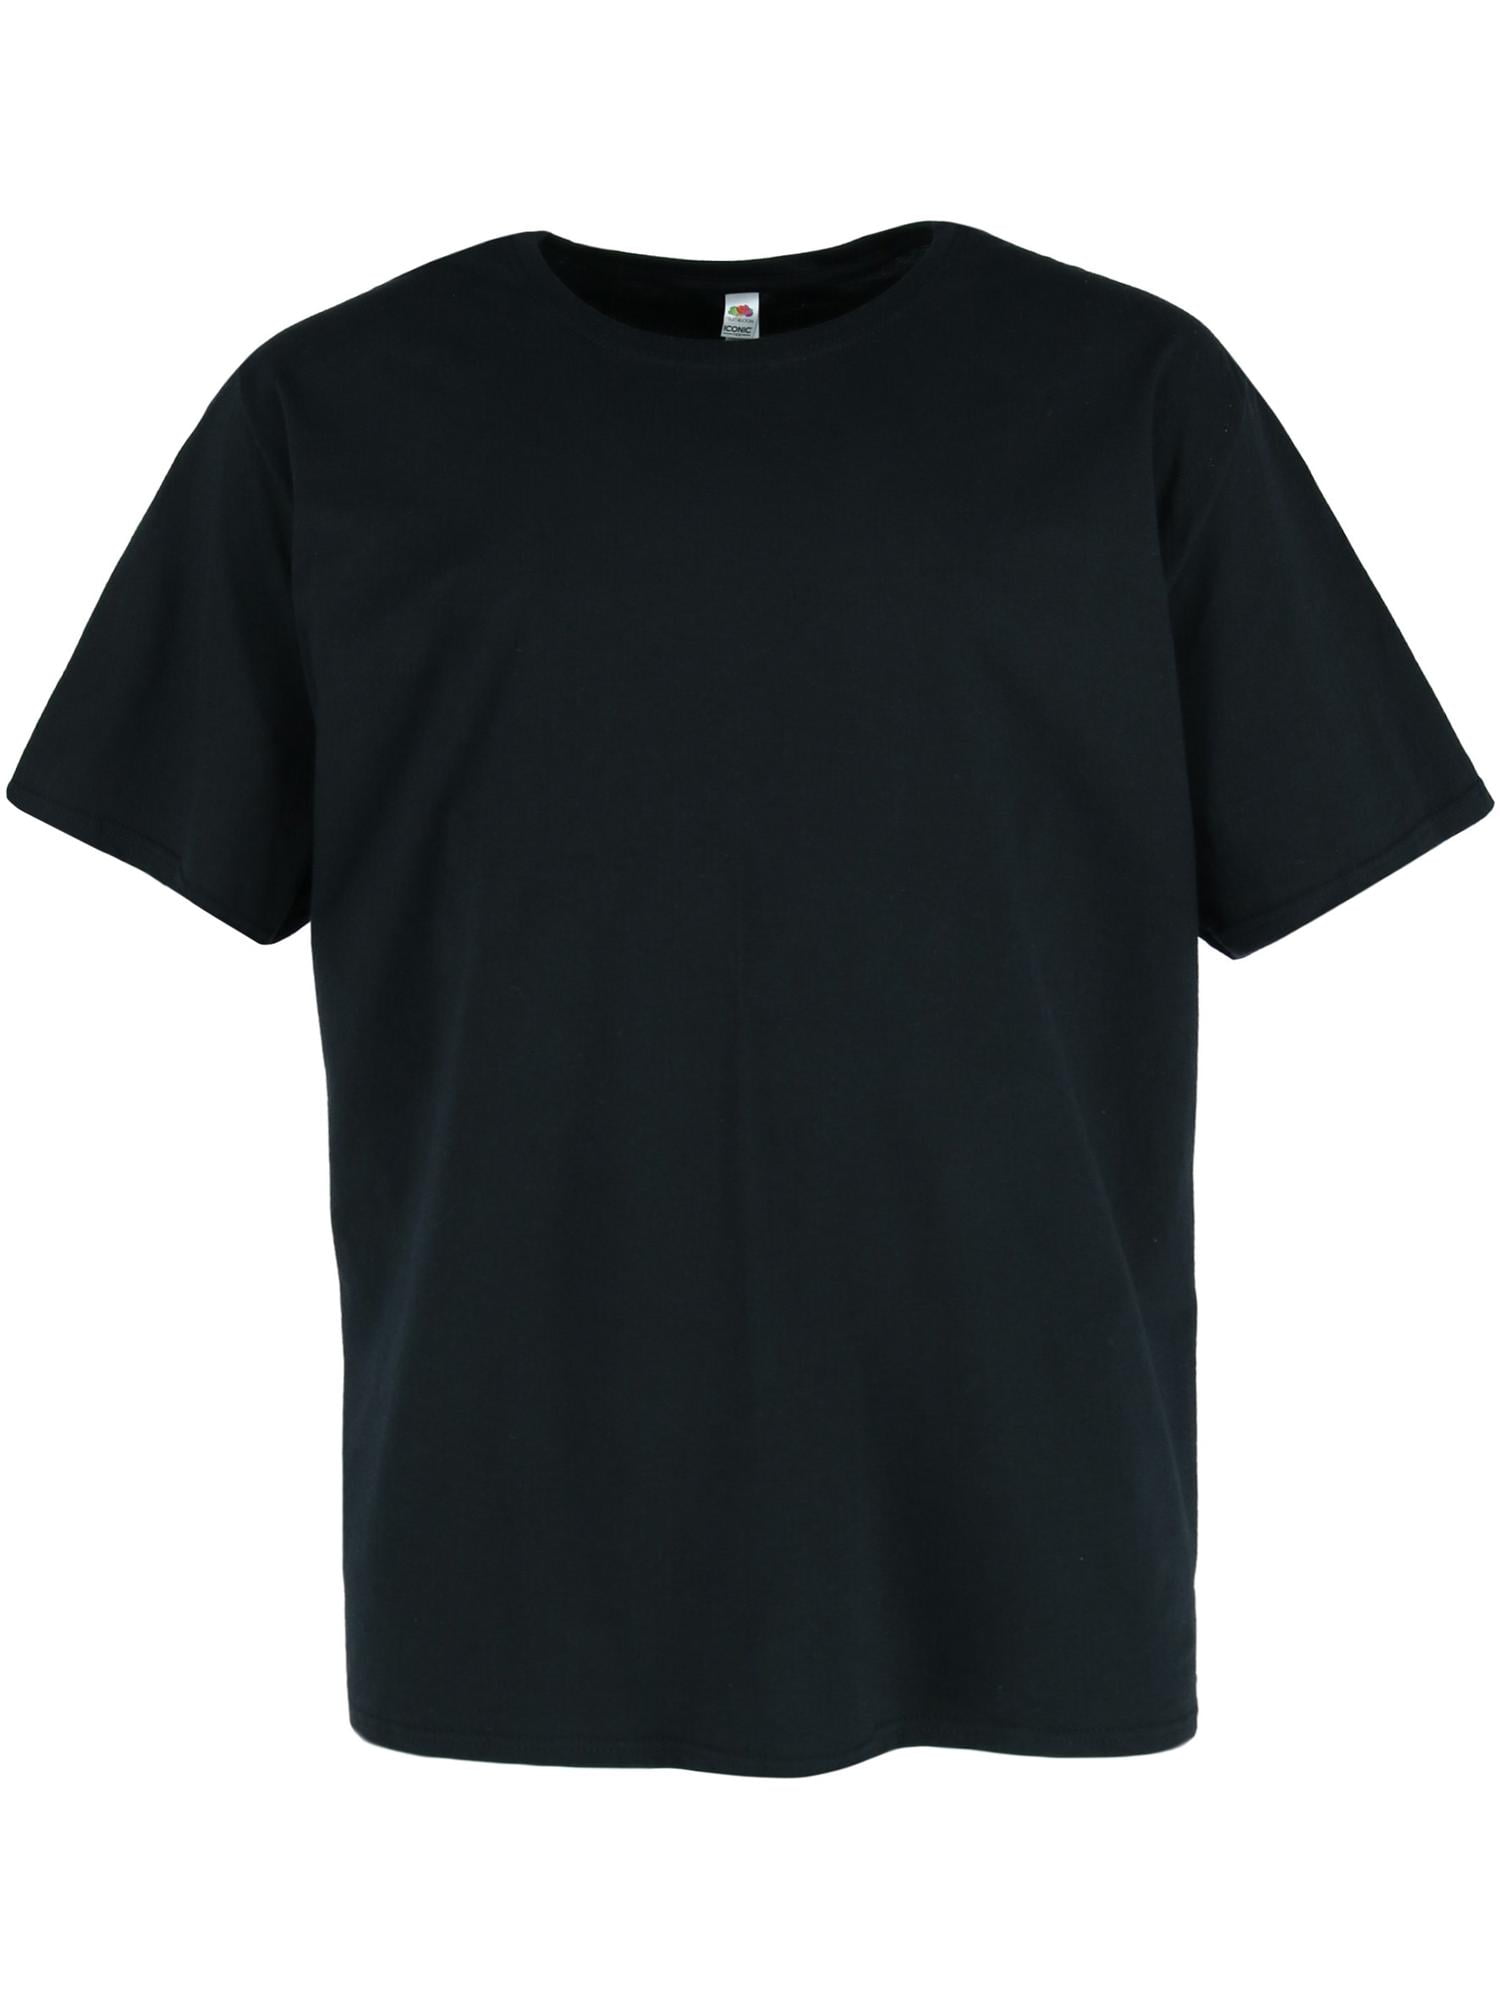 Fruit of the Loom Basic Solid Iconic T-Shirt (Men Big & Tall) - Walmart.com